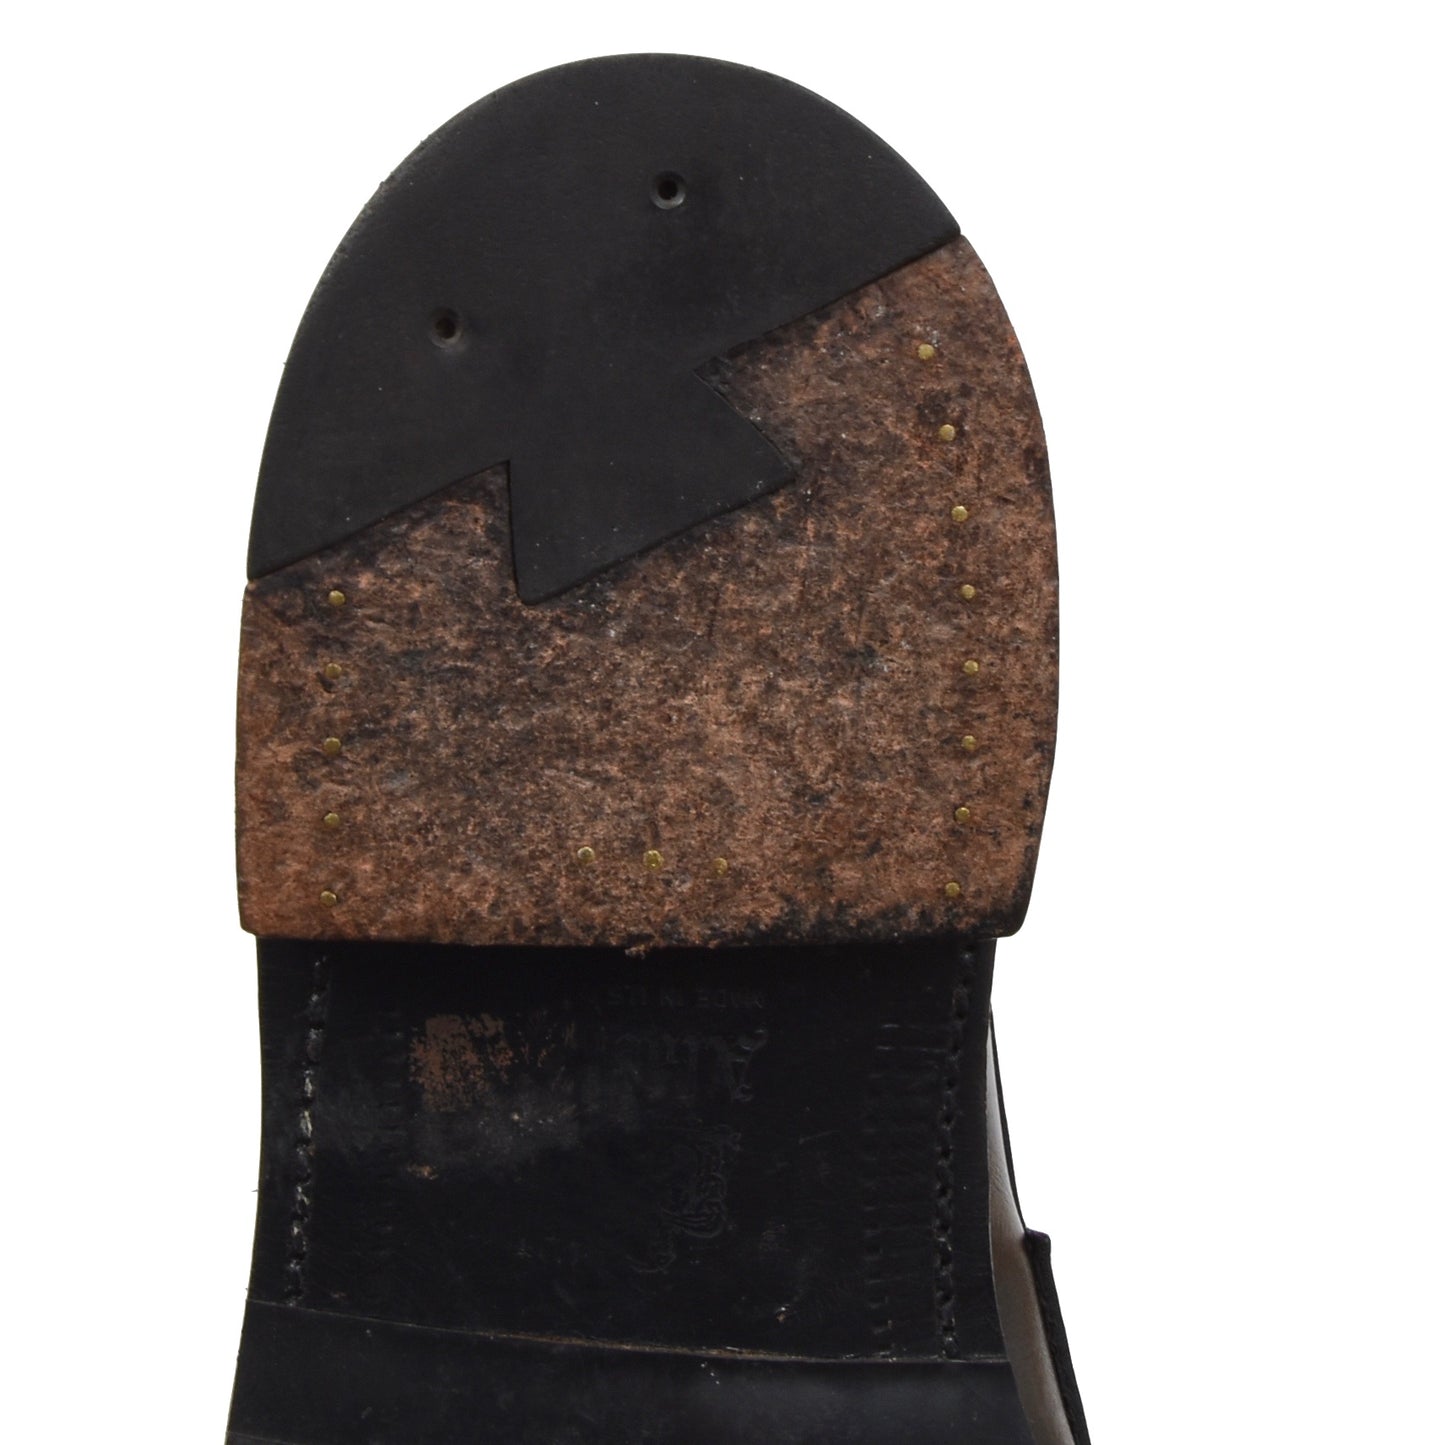 Alden Loafers Size 9 C/E - Black